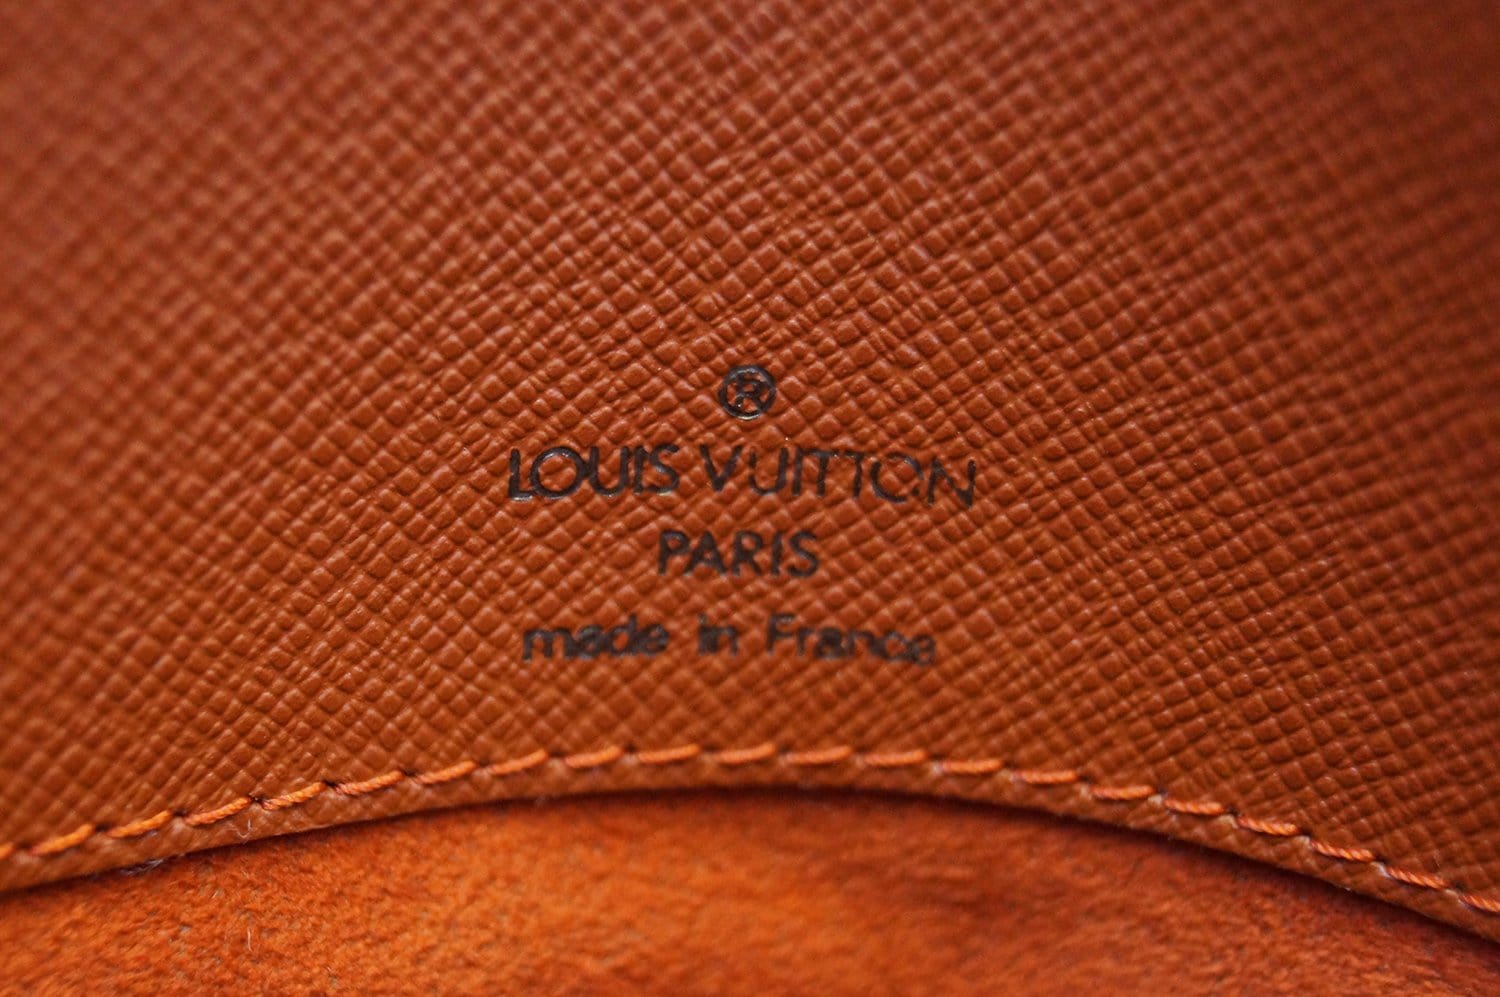 Louis Vuitton 2006 Pre-owned Damier Ebène Musette Salsa Crossbody Bag - Brown